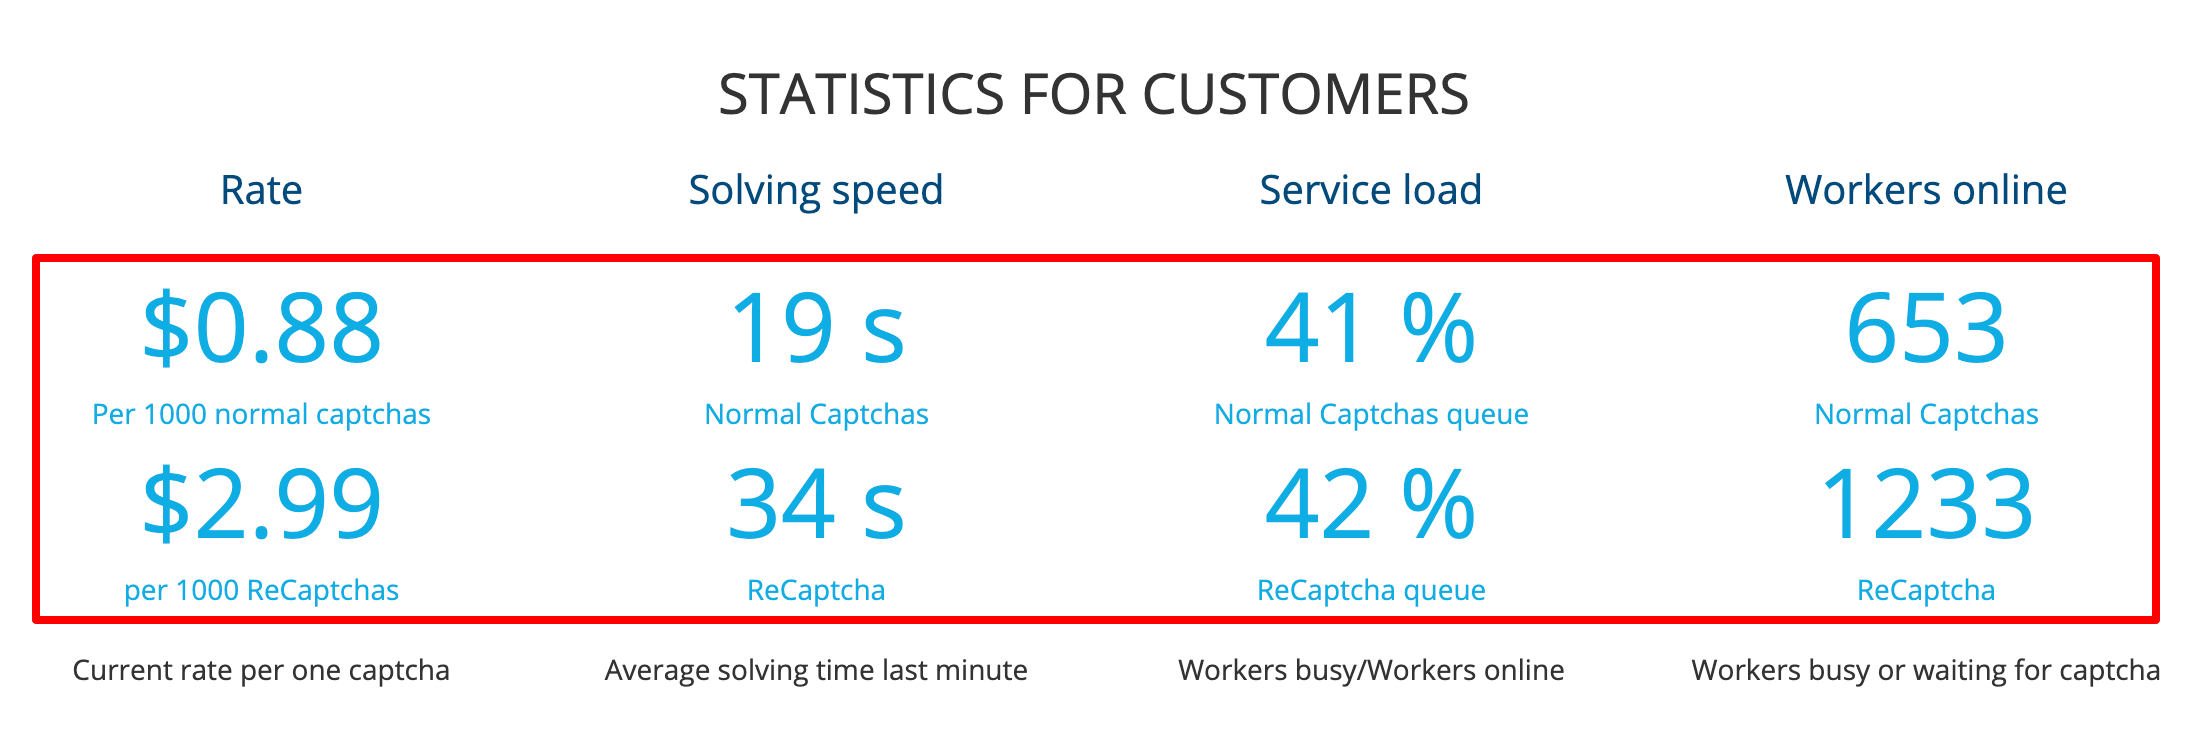 Stats For Customers- 2Captcha